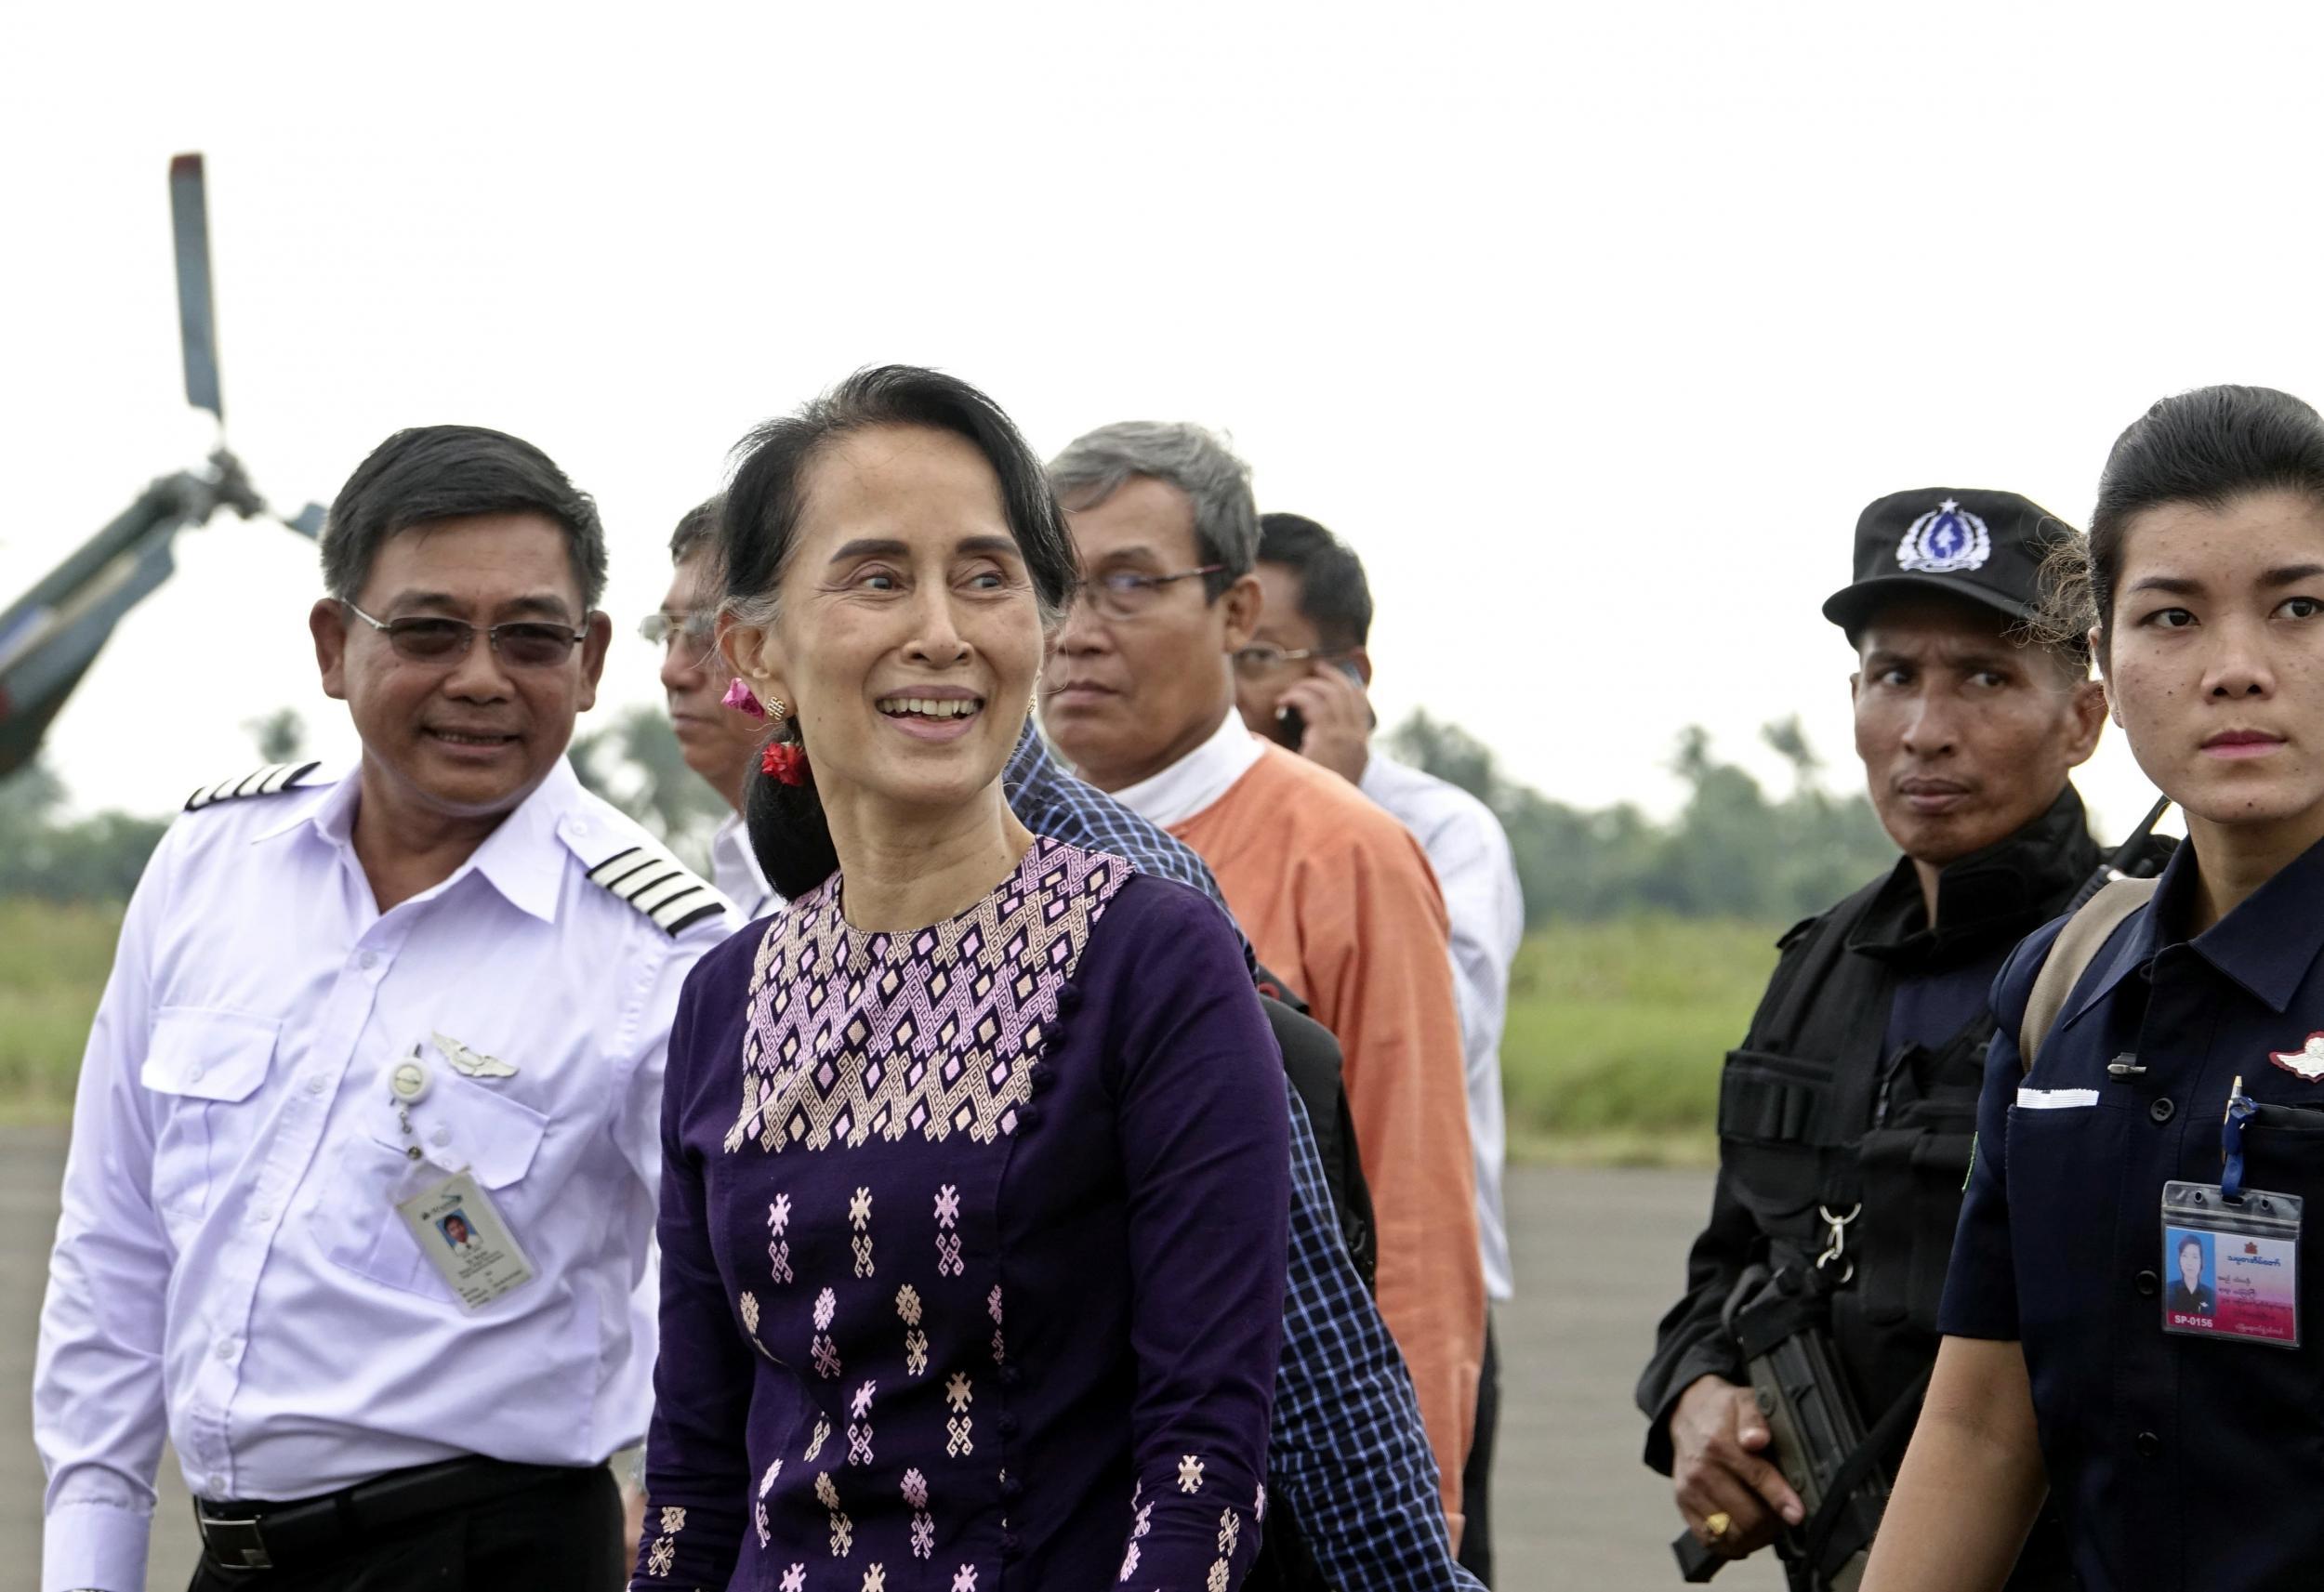 Aung San Suu Kyi urged people ‘not to quarrel’